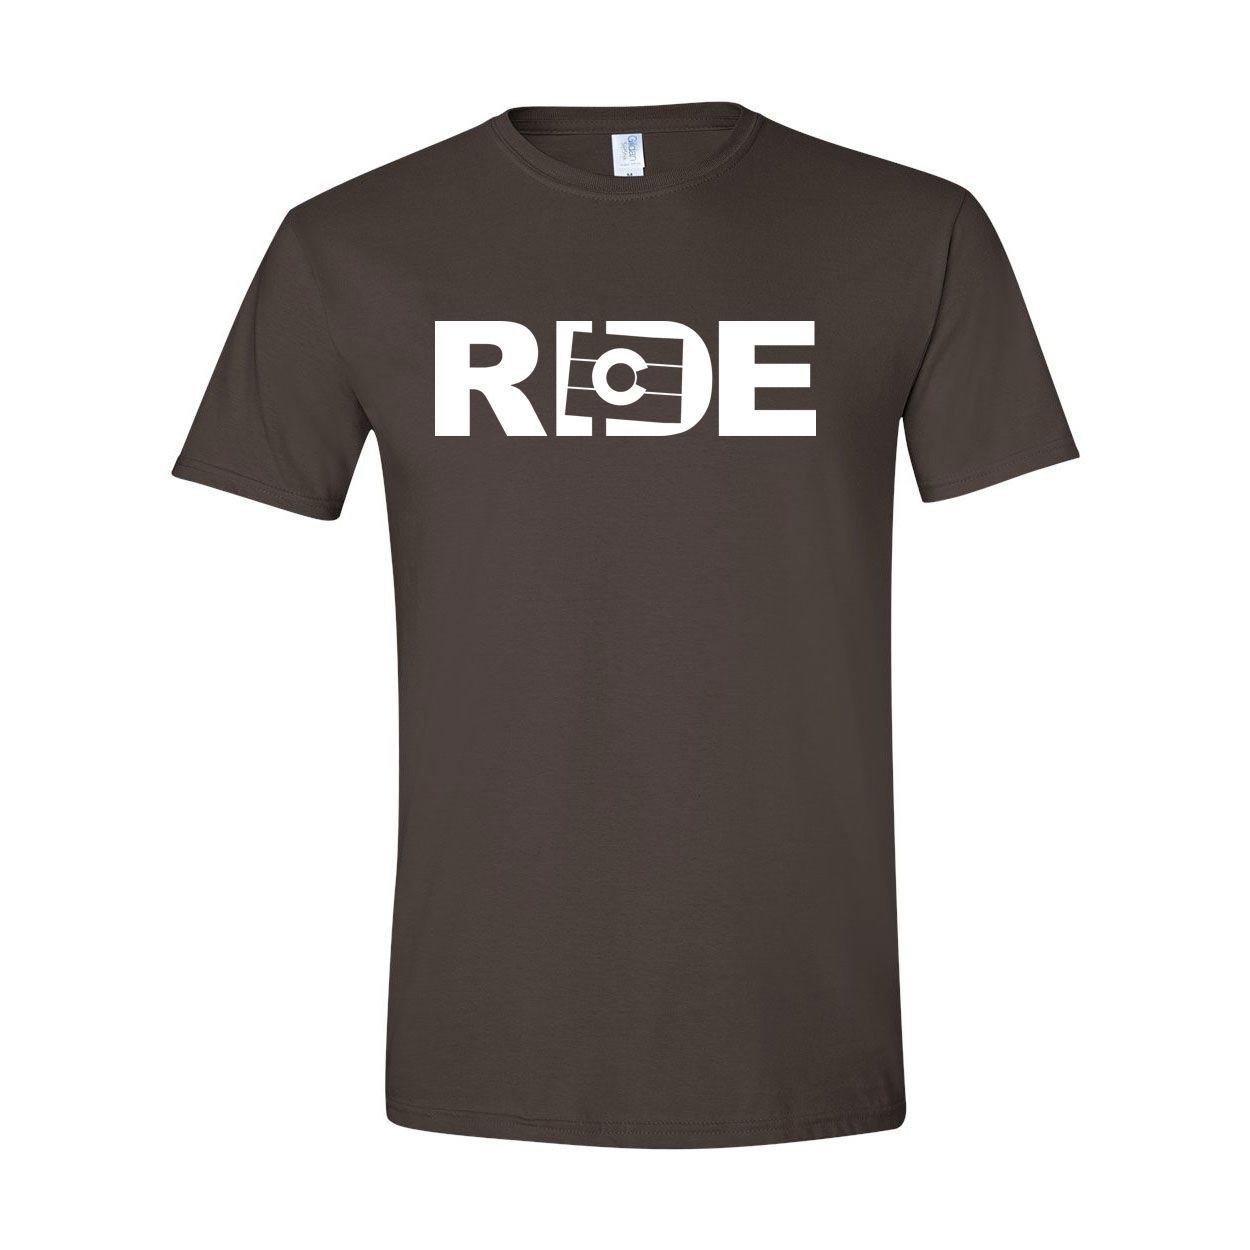 Ride Colorado Classic T-Shirt Dark Chocolate Brown (White Logo)